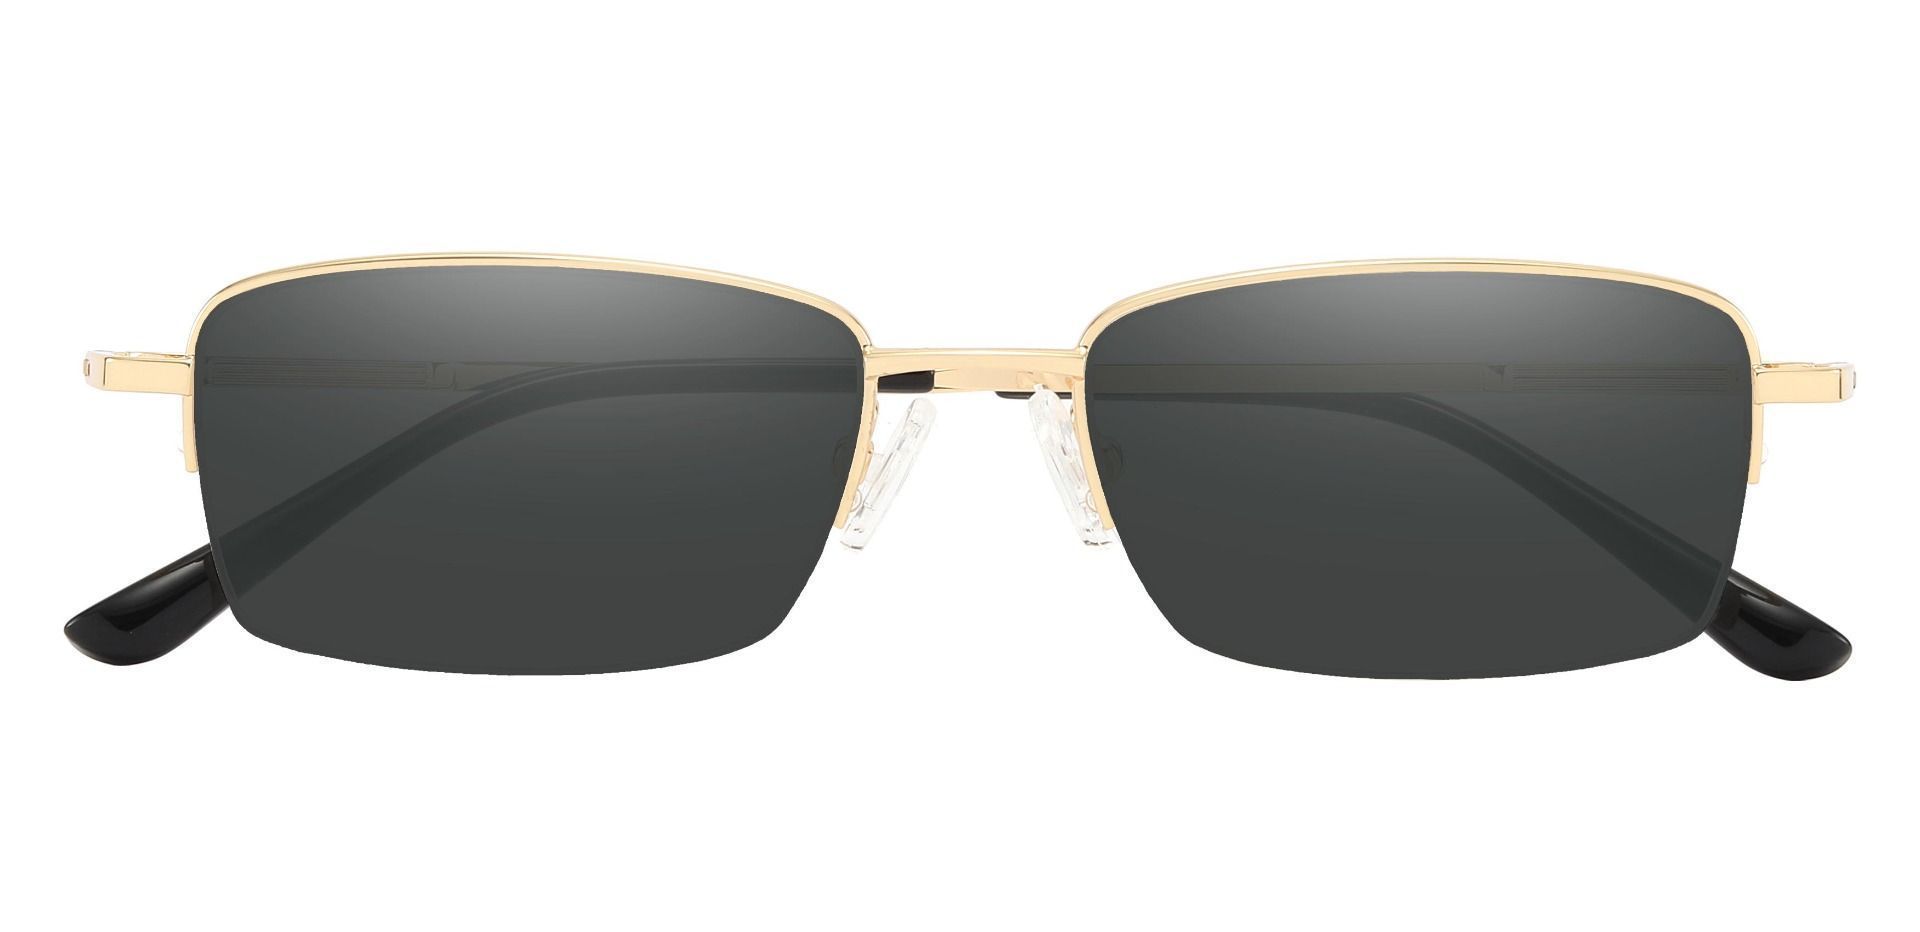 Milford Rectangle Progressive Sunglasses - Gold Frame With Gray Lenses